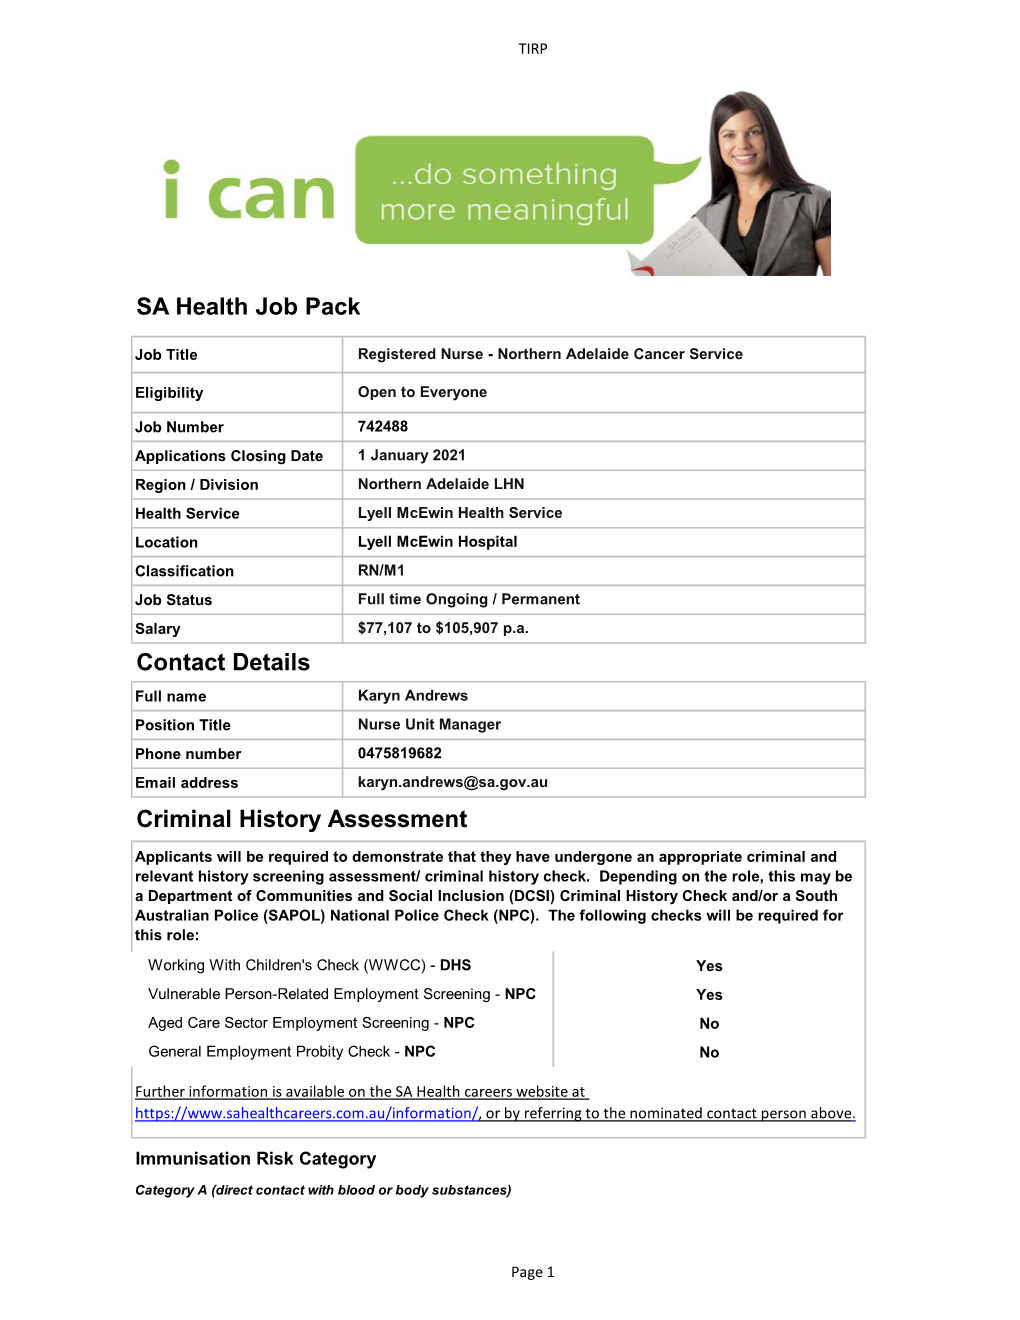 SA Health Job Pack Contact Details Criminal History Assessment